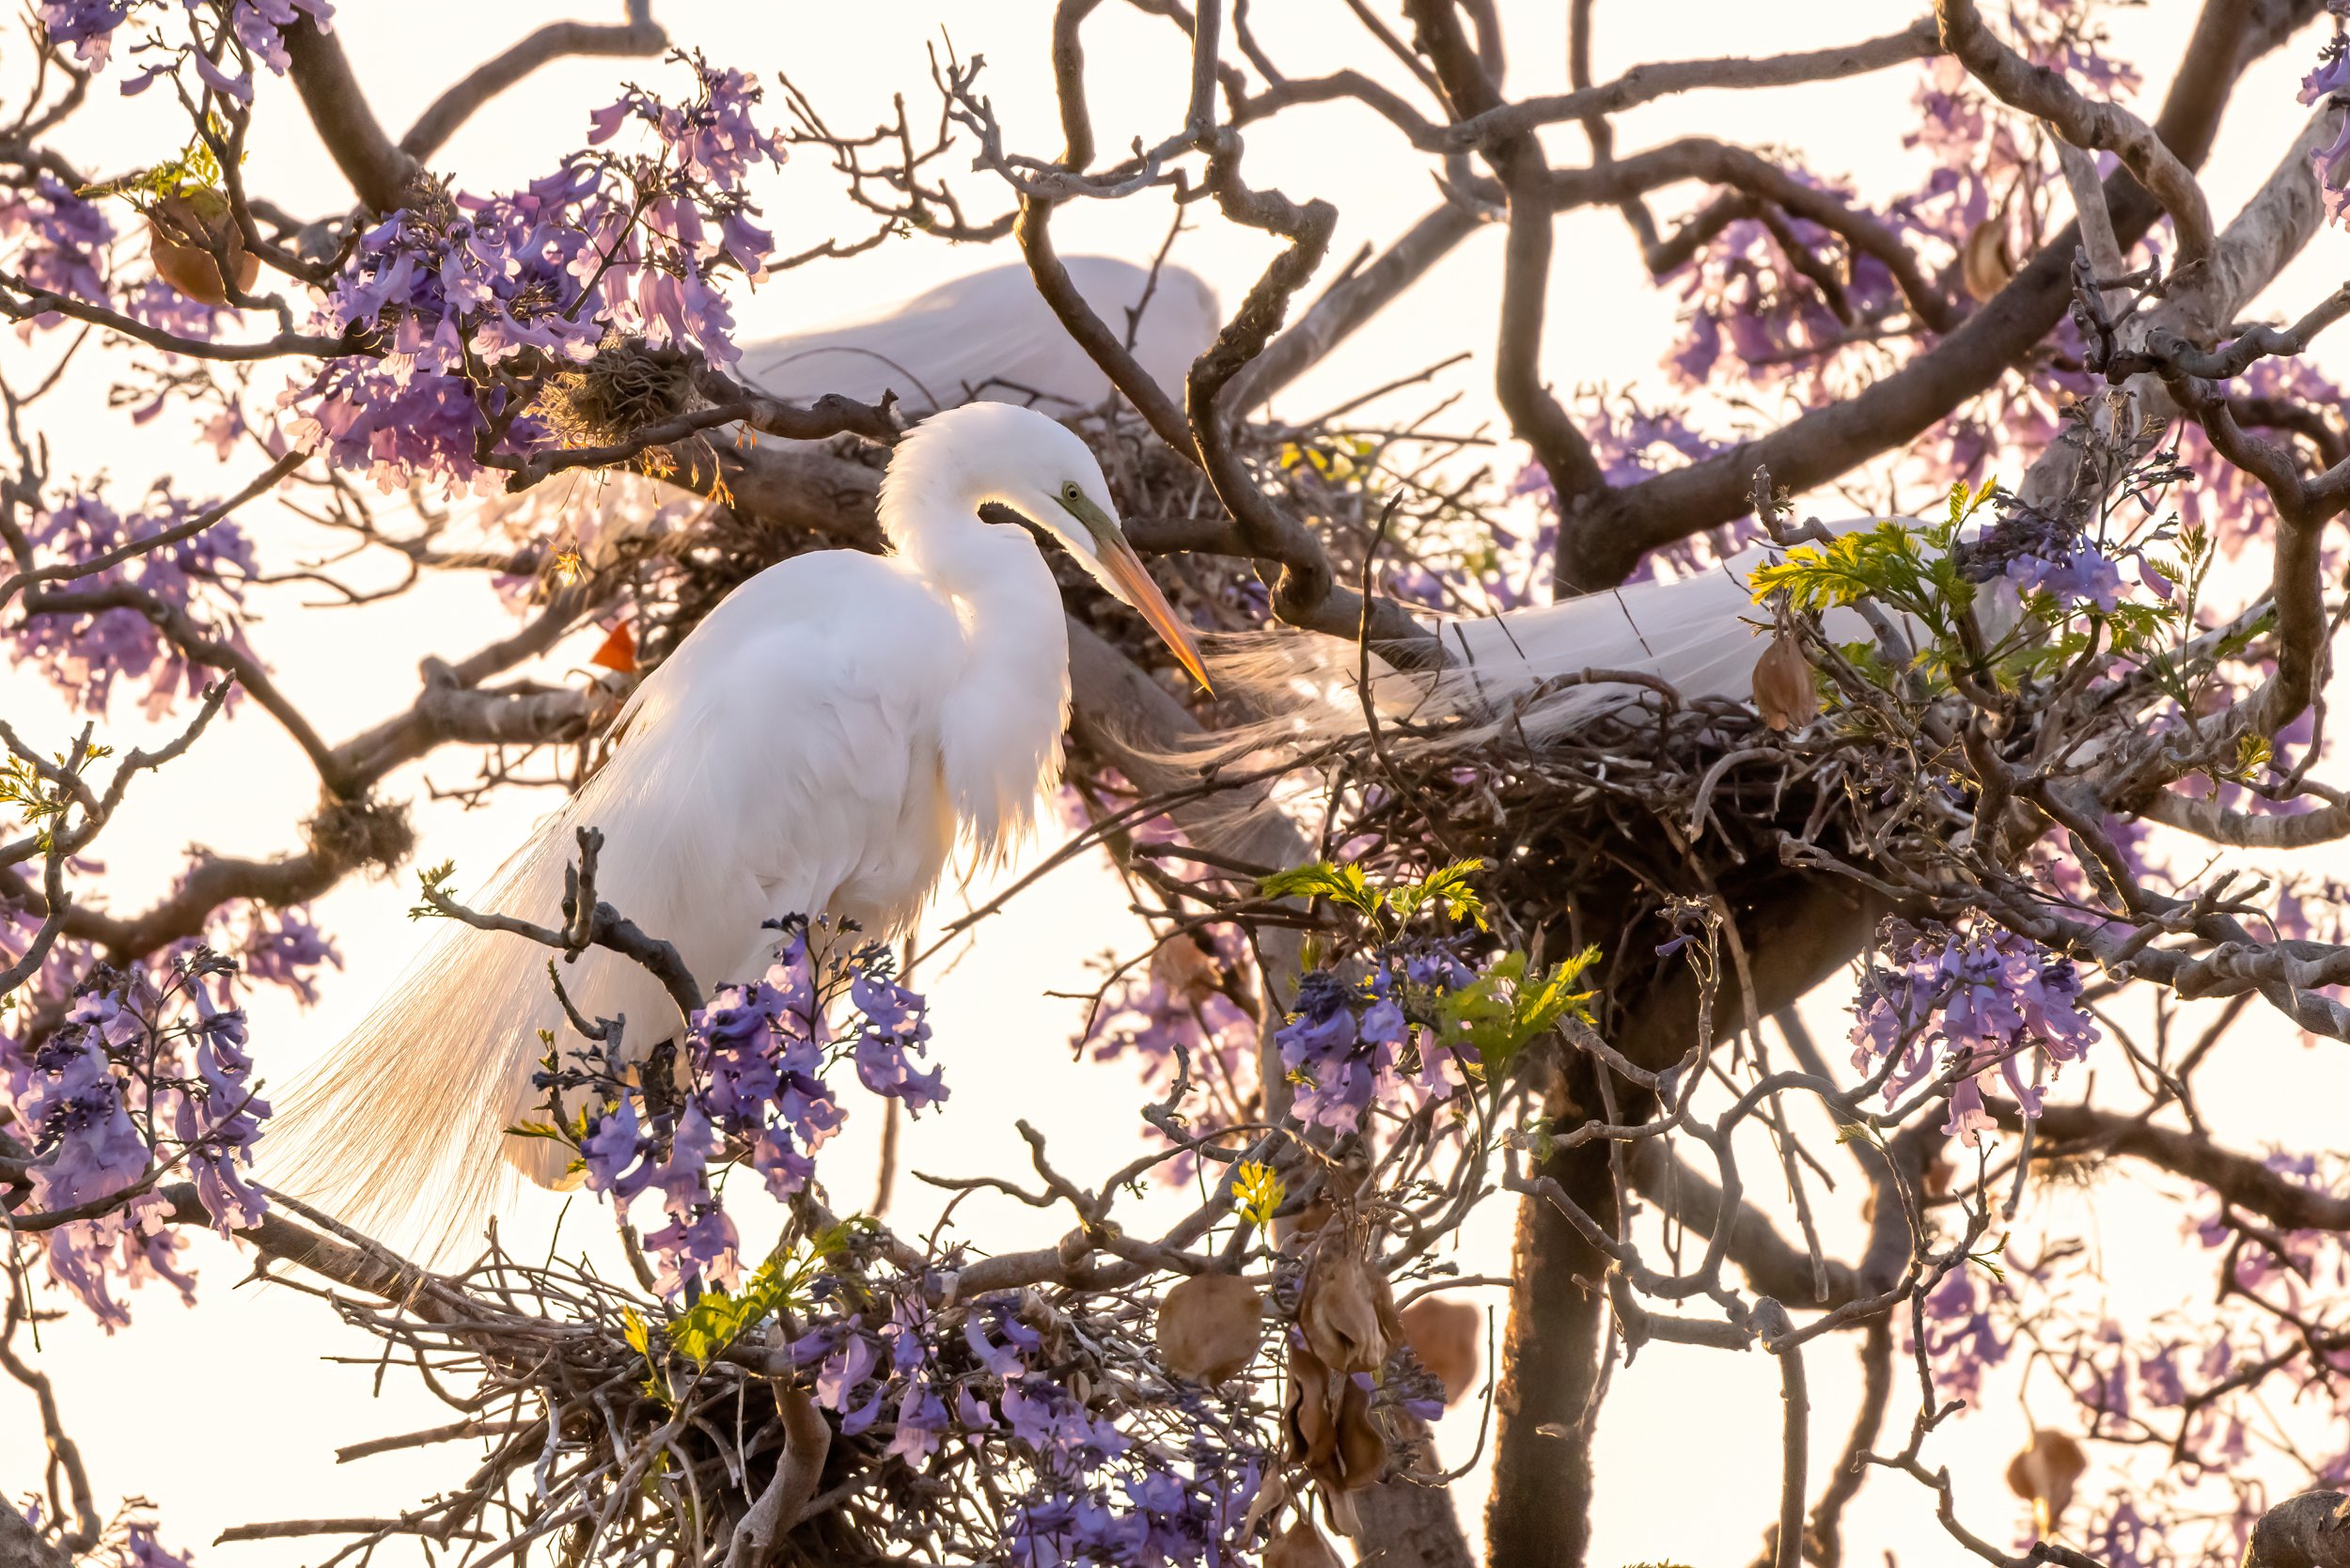 Nesting Egrets, San Miguel de Allende, Mexico